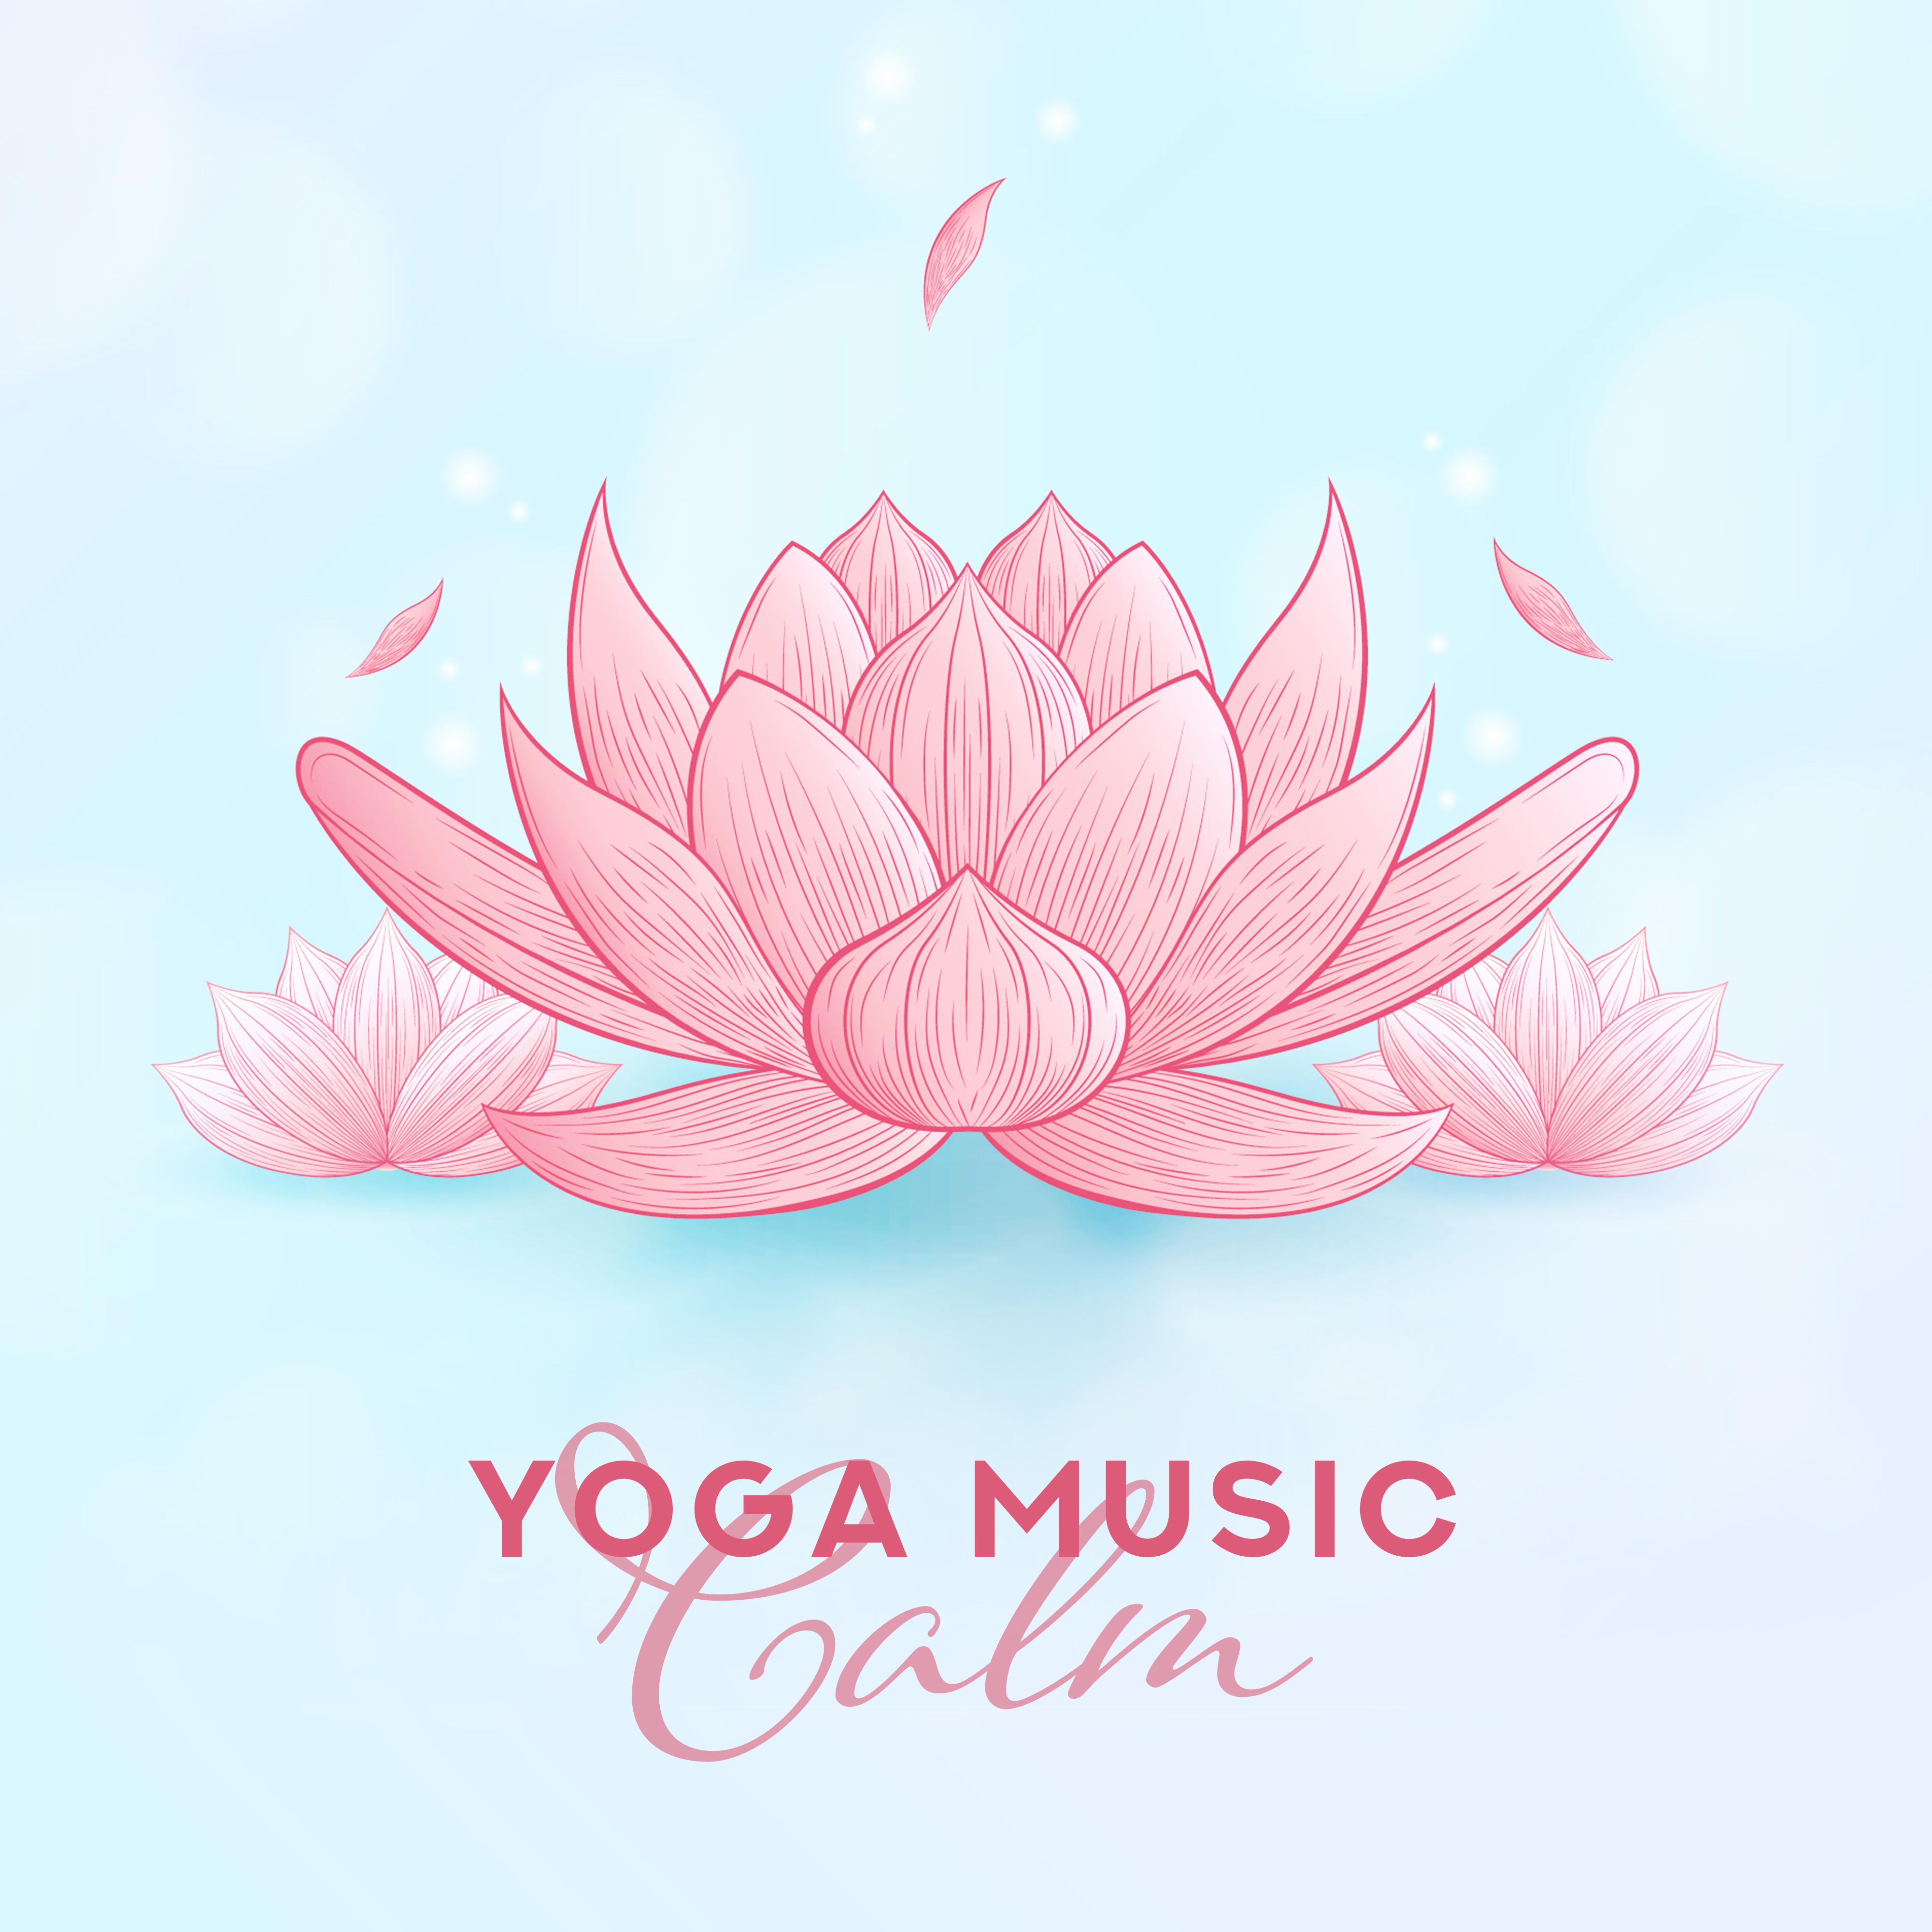 Yoga Music Calm – Meditation Music for Relaxation, Inner Harmony, Yoga Training, Blissfull Mantras, Spiritual Awakening, Deep Meditation, Reduce Stress